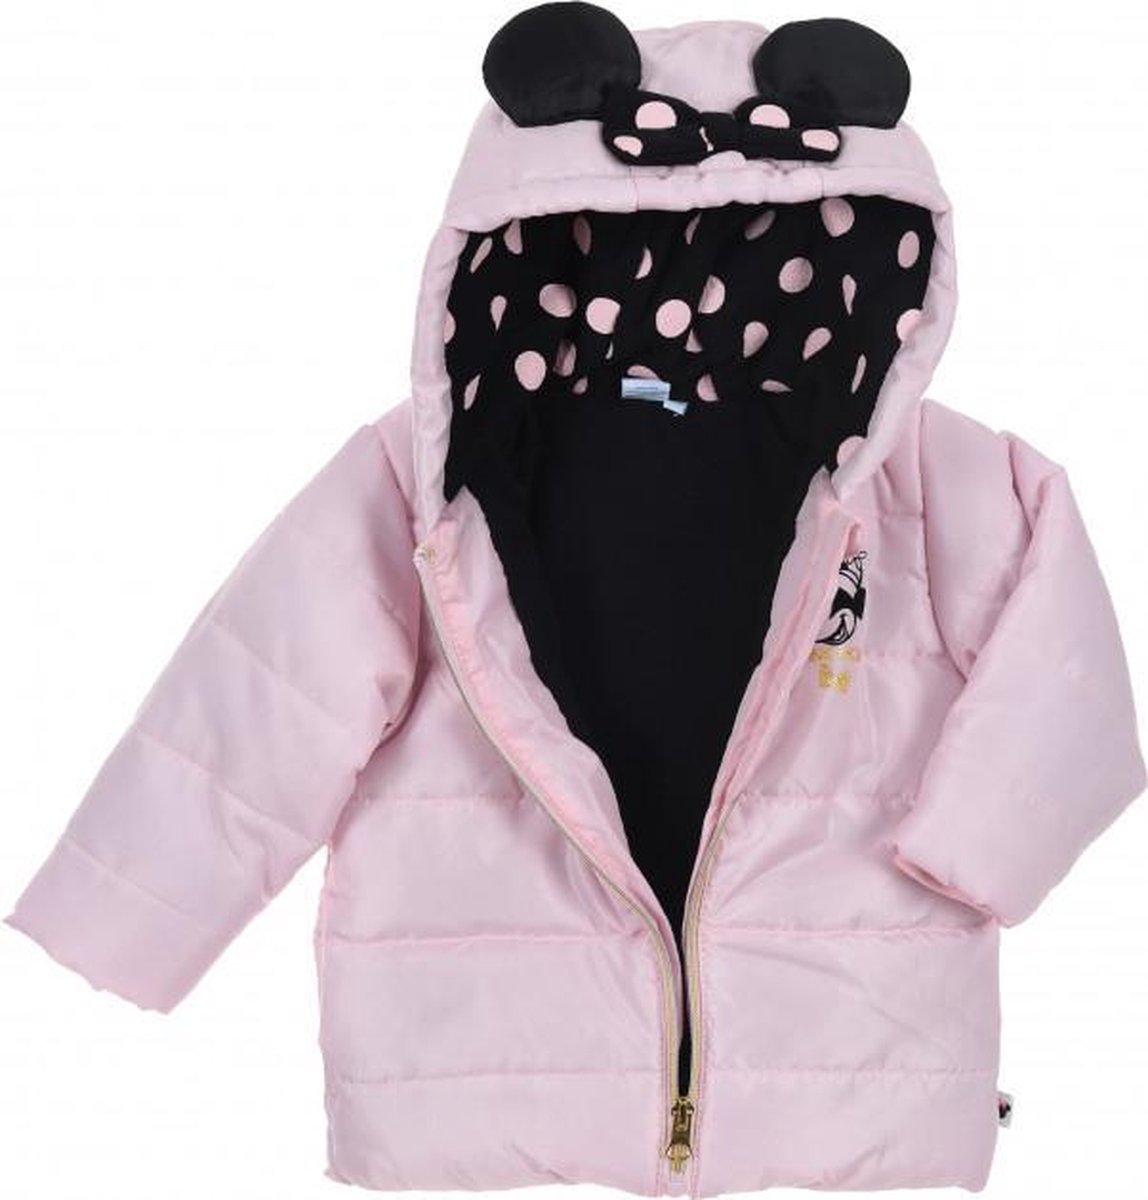 Kleding Meisjeskleding Babykleding voor meisjes Pyjamas & Badjassen Vintage Disney Baby's Sneeuwpak Bunting Sz 0/6M Minnie Mouse 